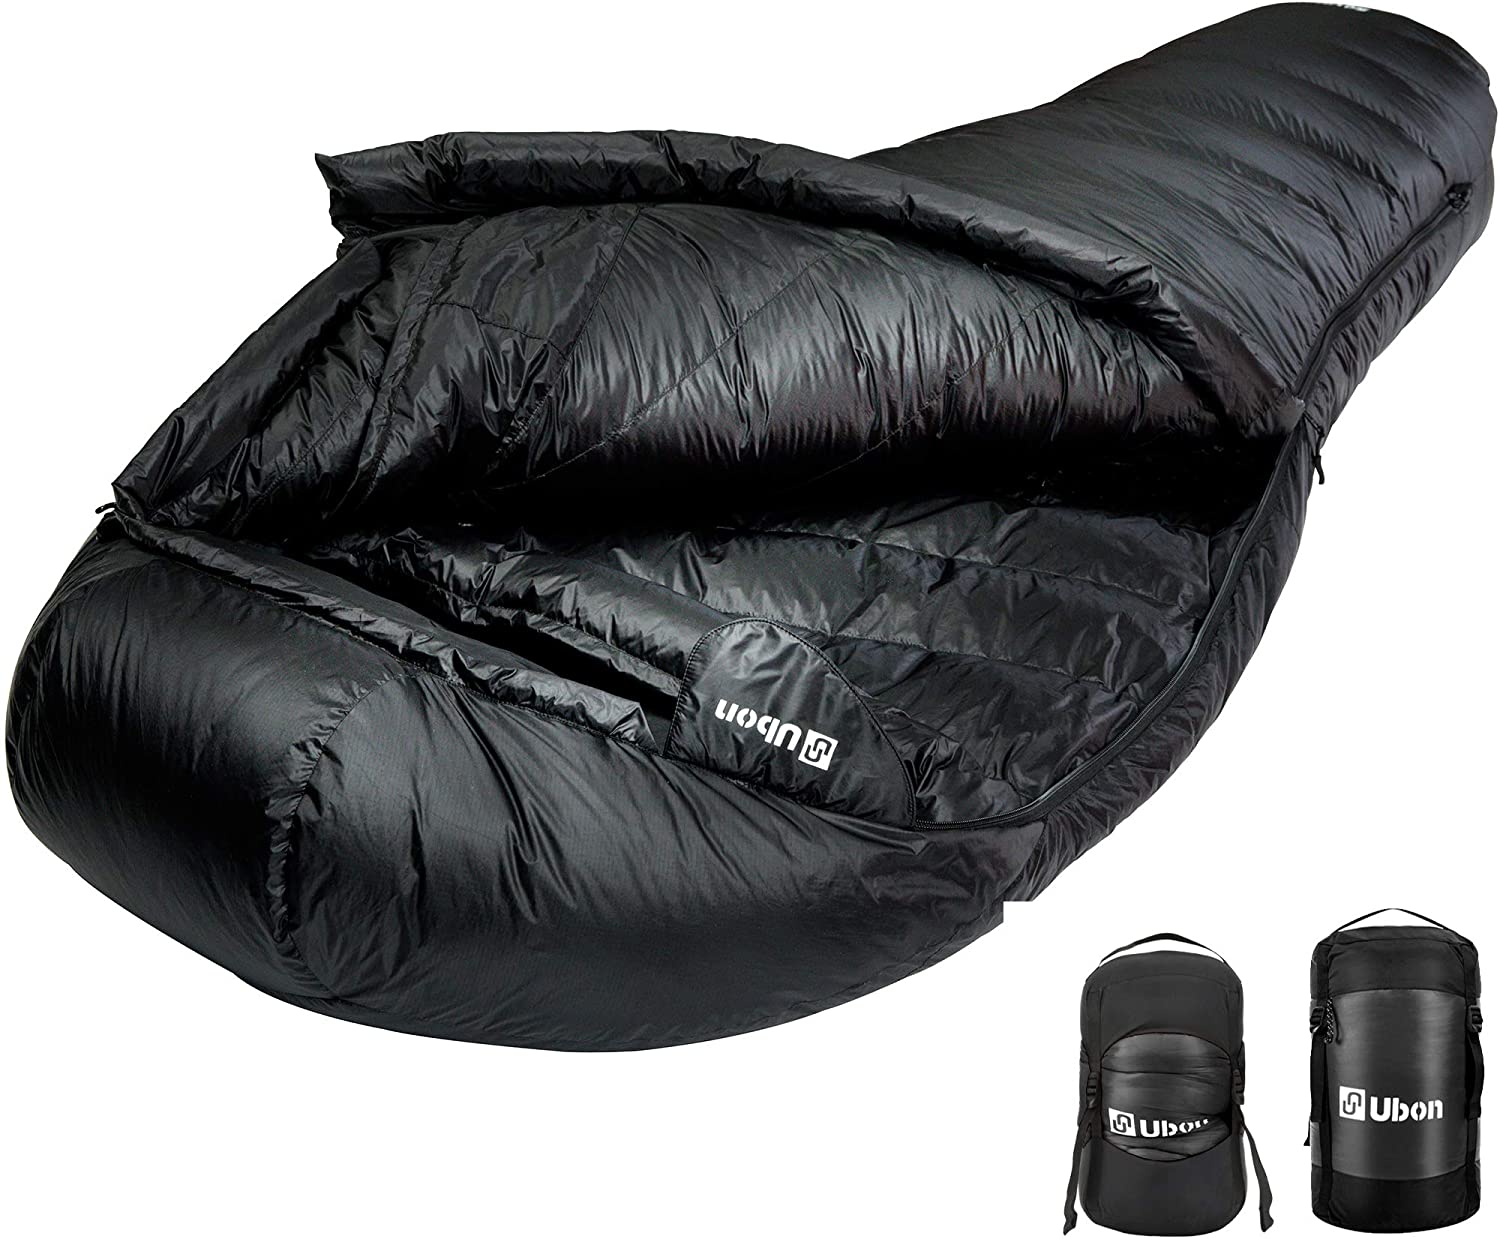 Ubon Extreme 10 Degree F 650 Fill Power Down Sleeping Bag Waterproof Mummy Sleeping Bag for Adults, Ultralight Camping Sleeping Bag